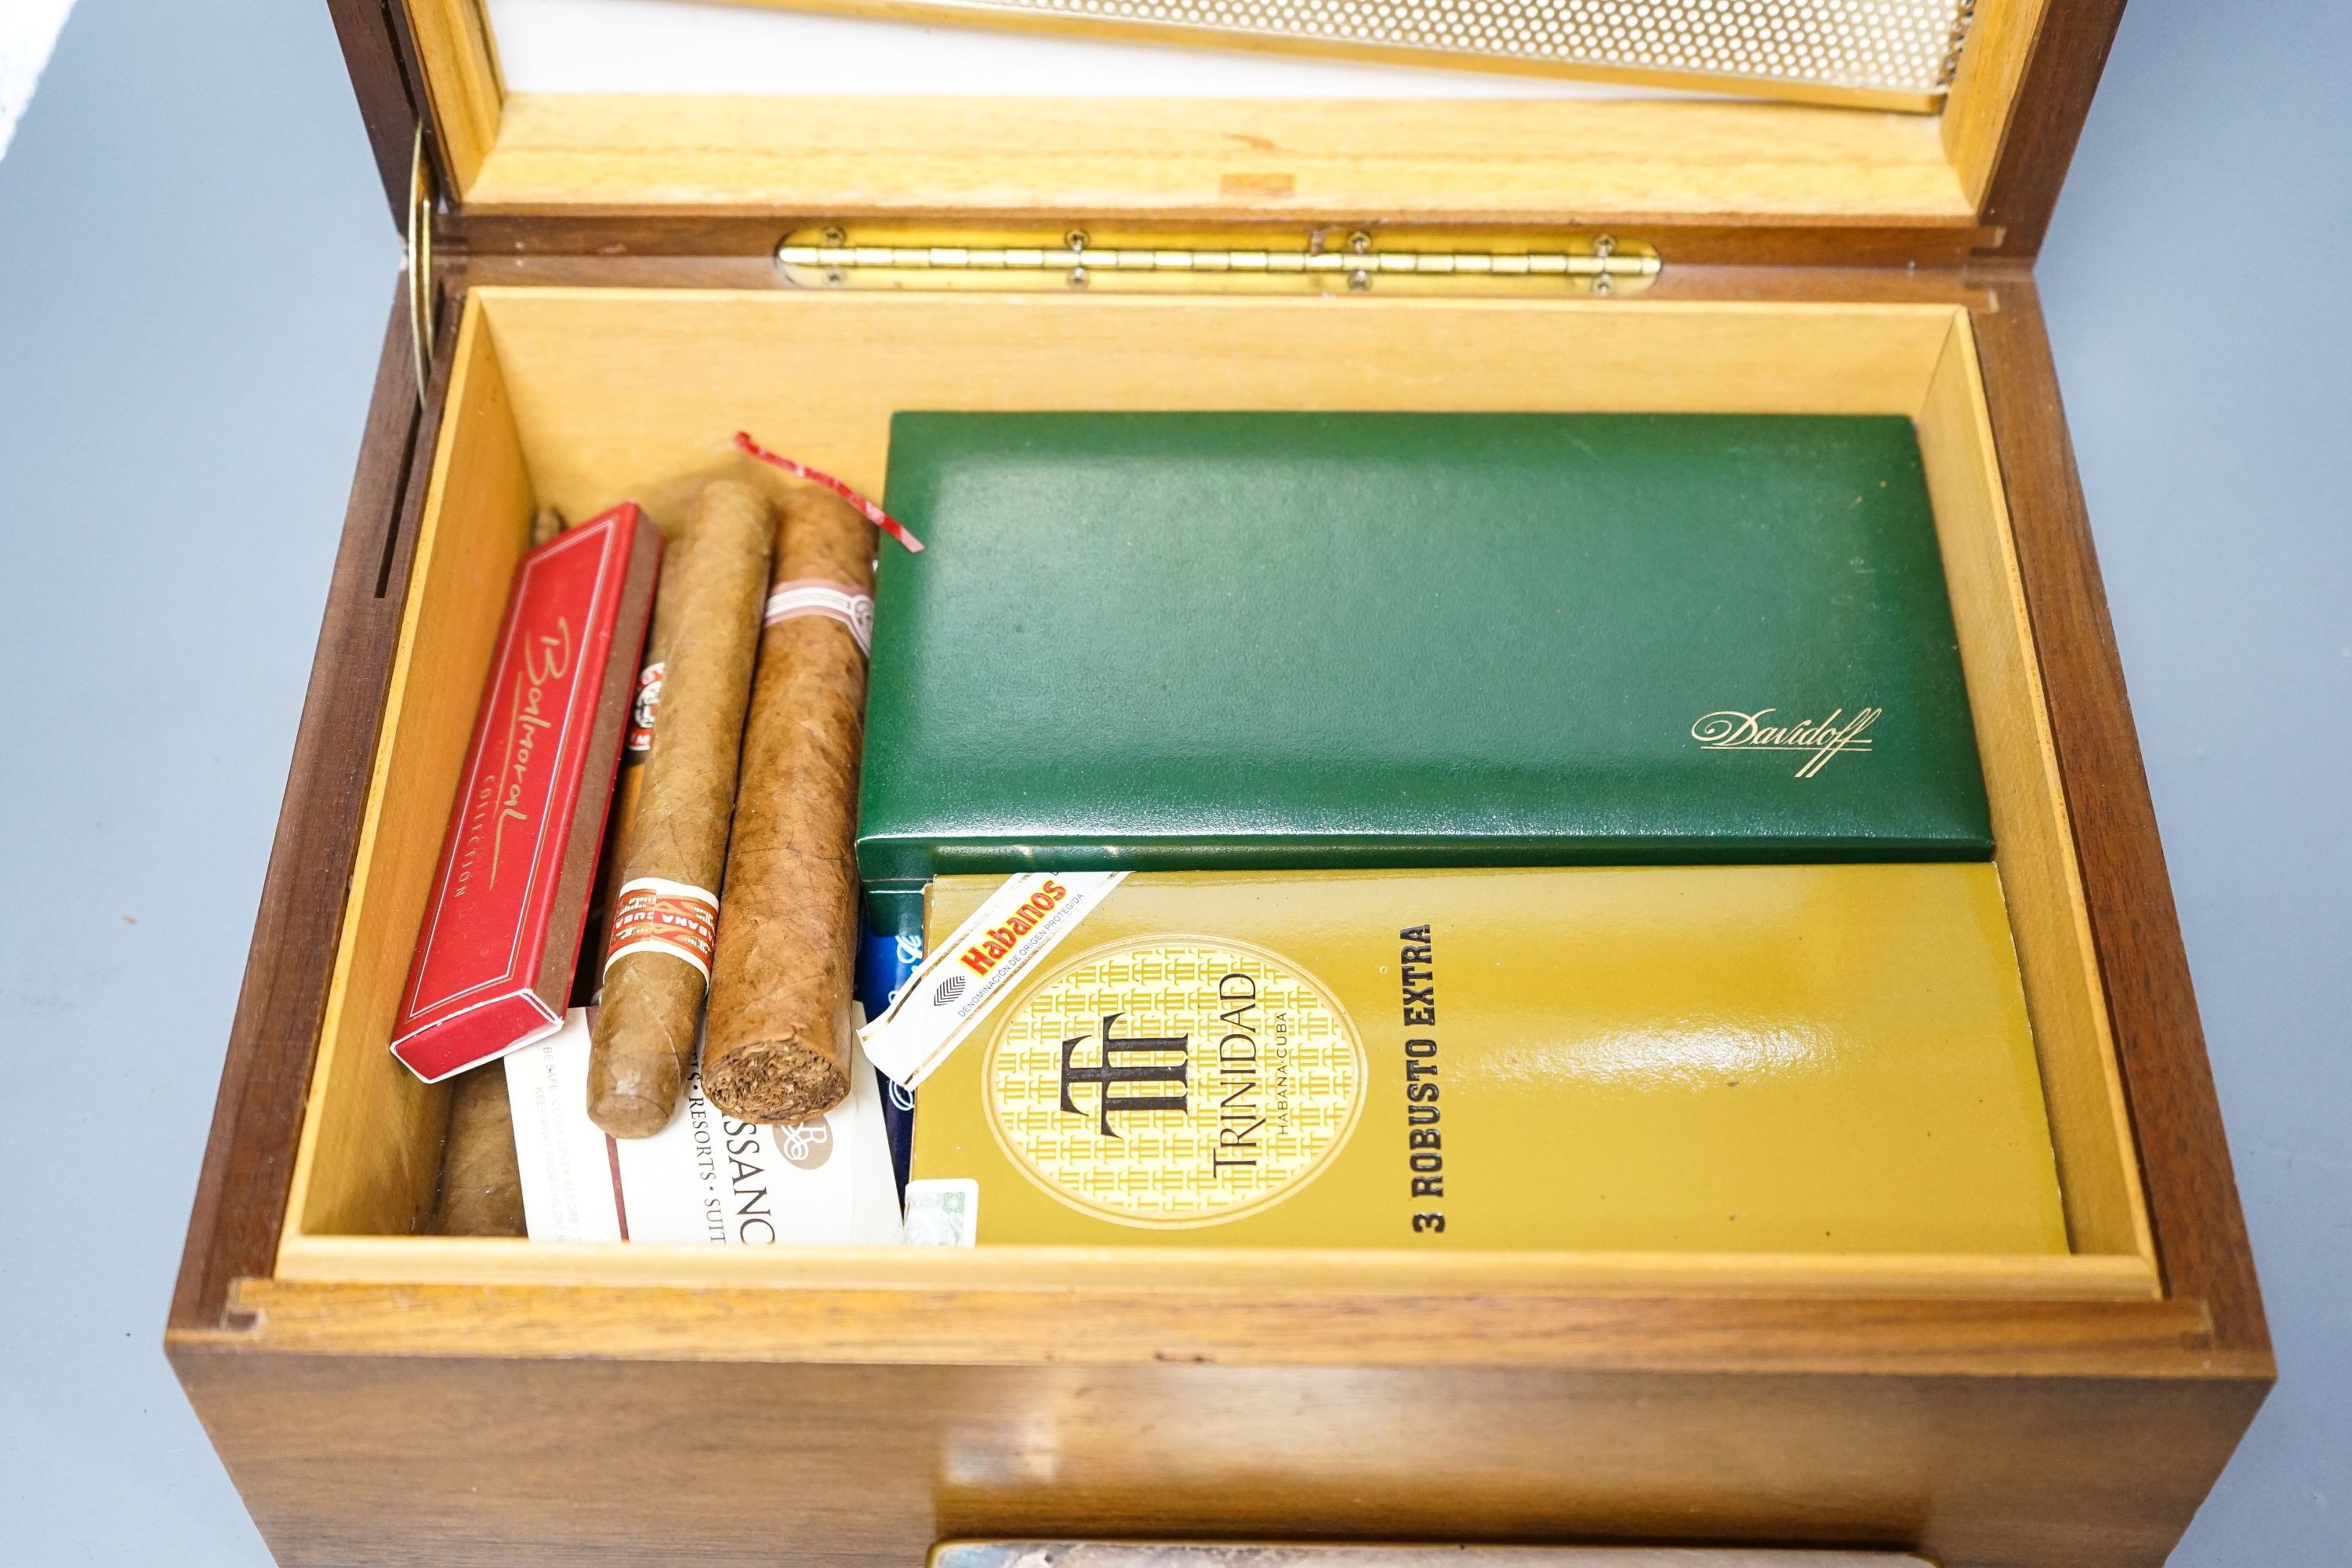 A cased Davidoff cigar cutter, walnut humidor, plated cigarette box, various cigars etc.